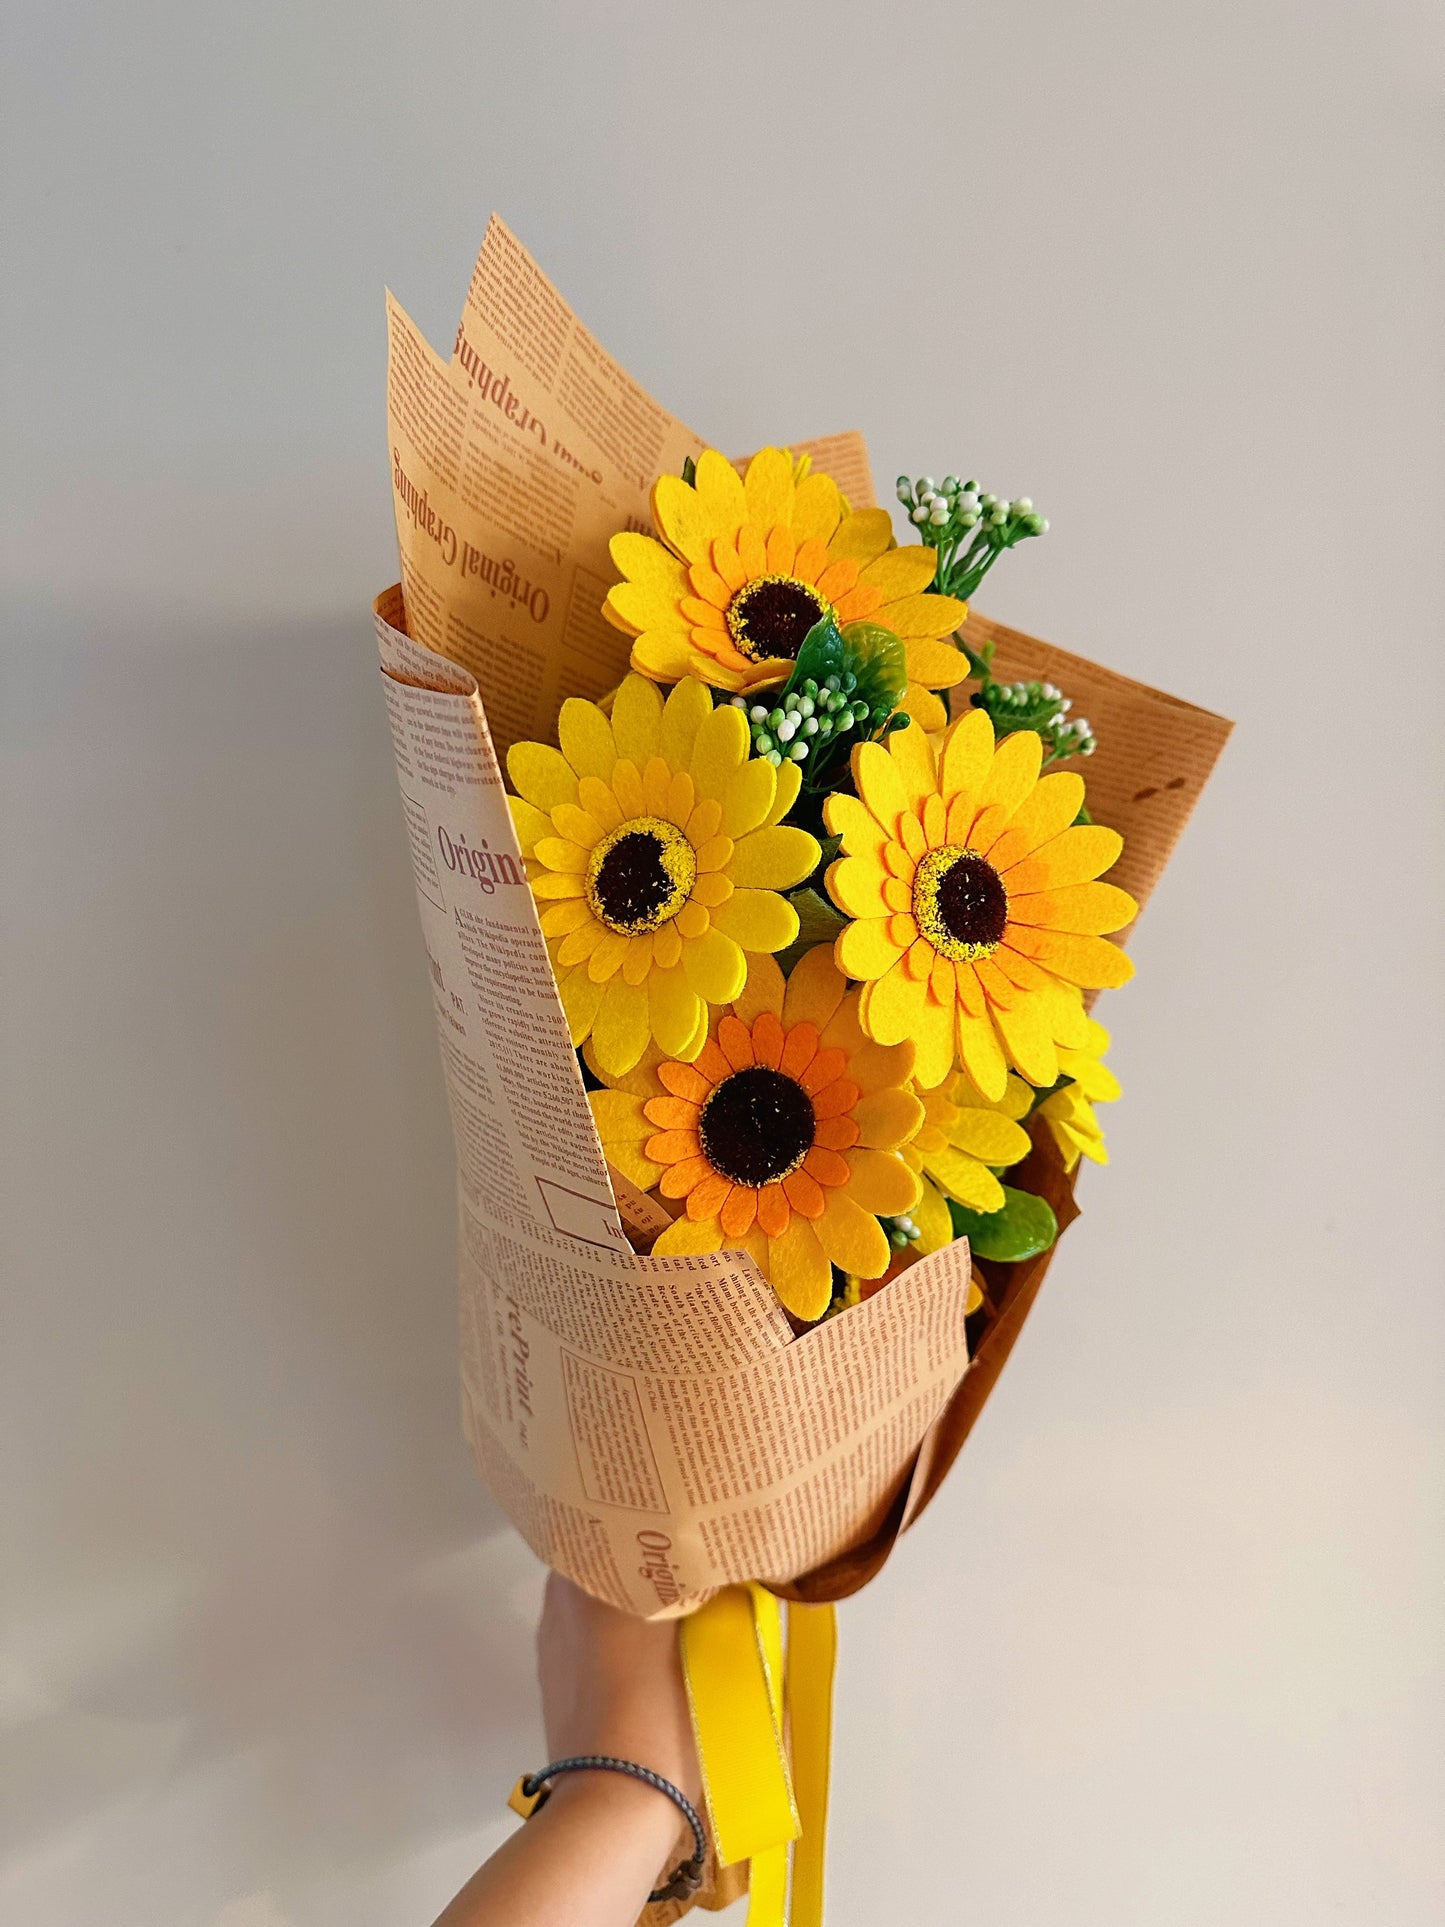 DIY felt flowers bouquet - Big Felt Sunflowers bouquet, Felt flowers DIY kit, No Cutting, Sunflowers, birthday gift